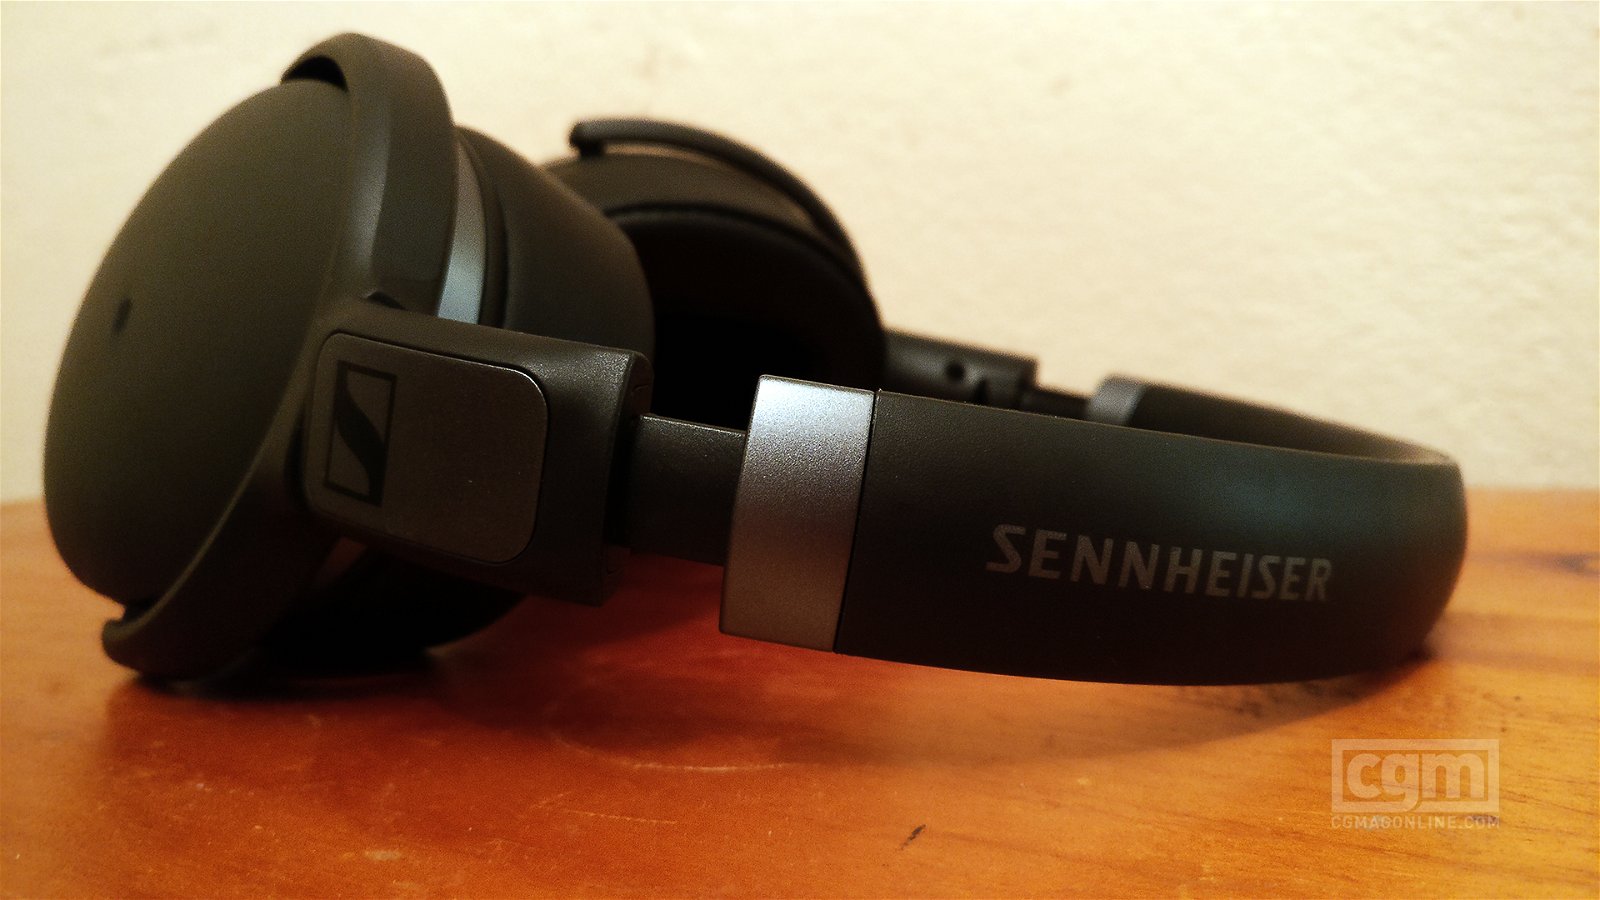 Sennheiser 4.40Bt Headphones Review 1